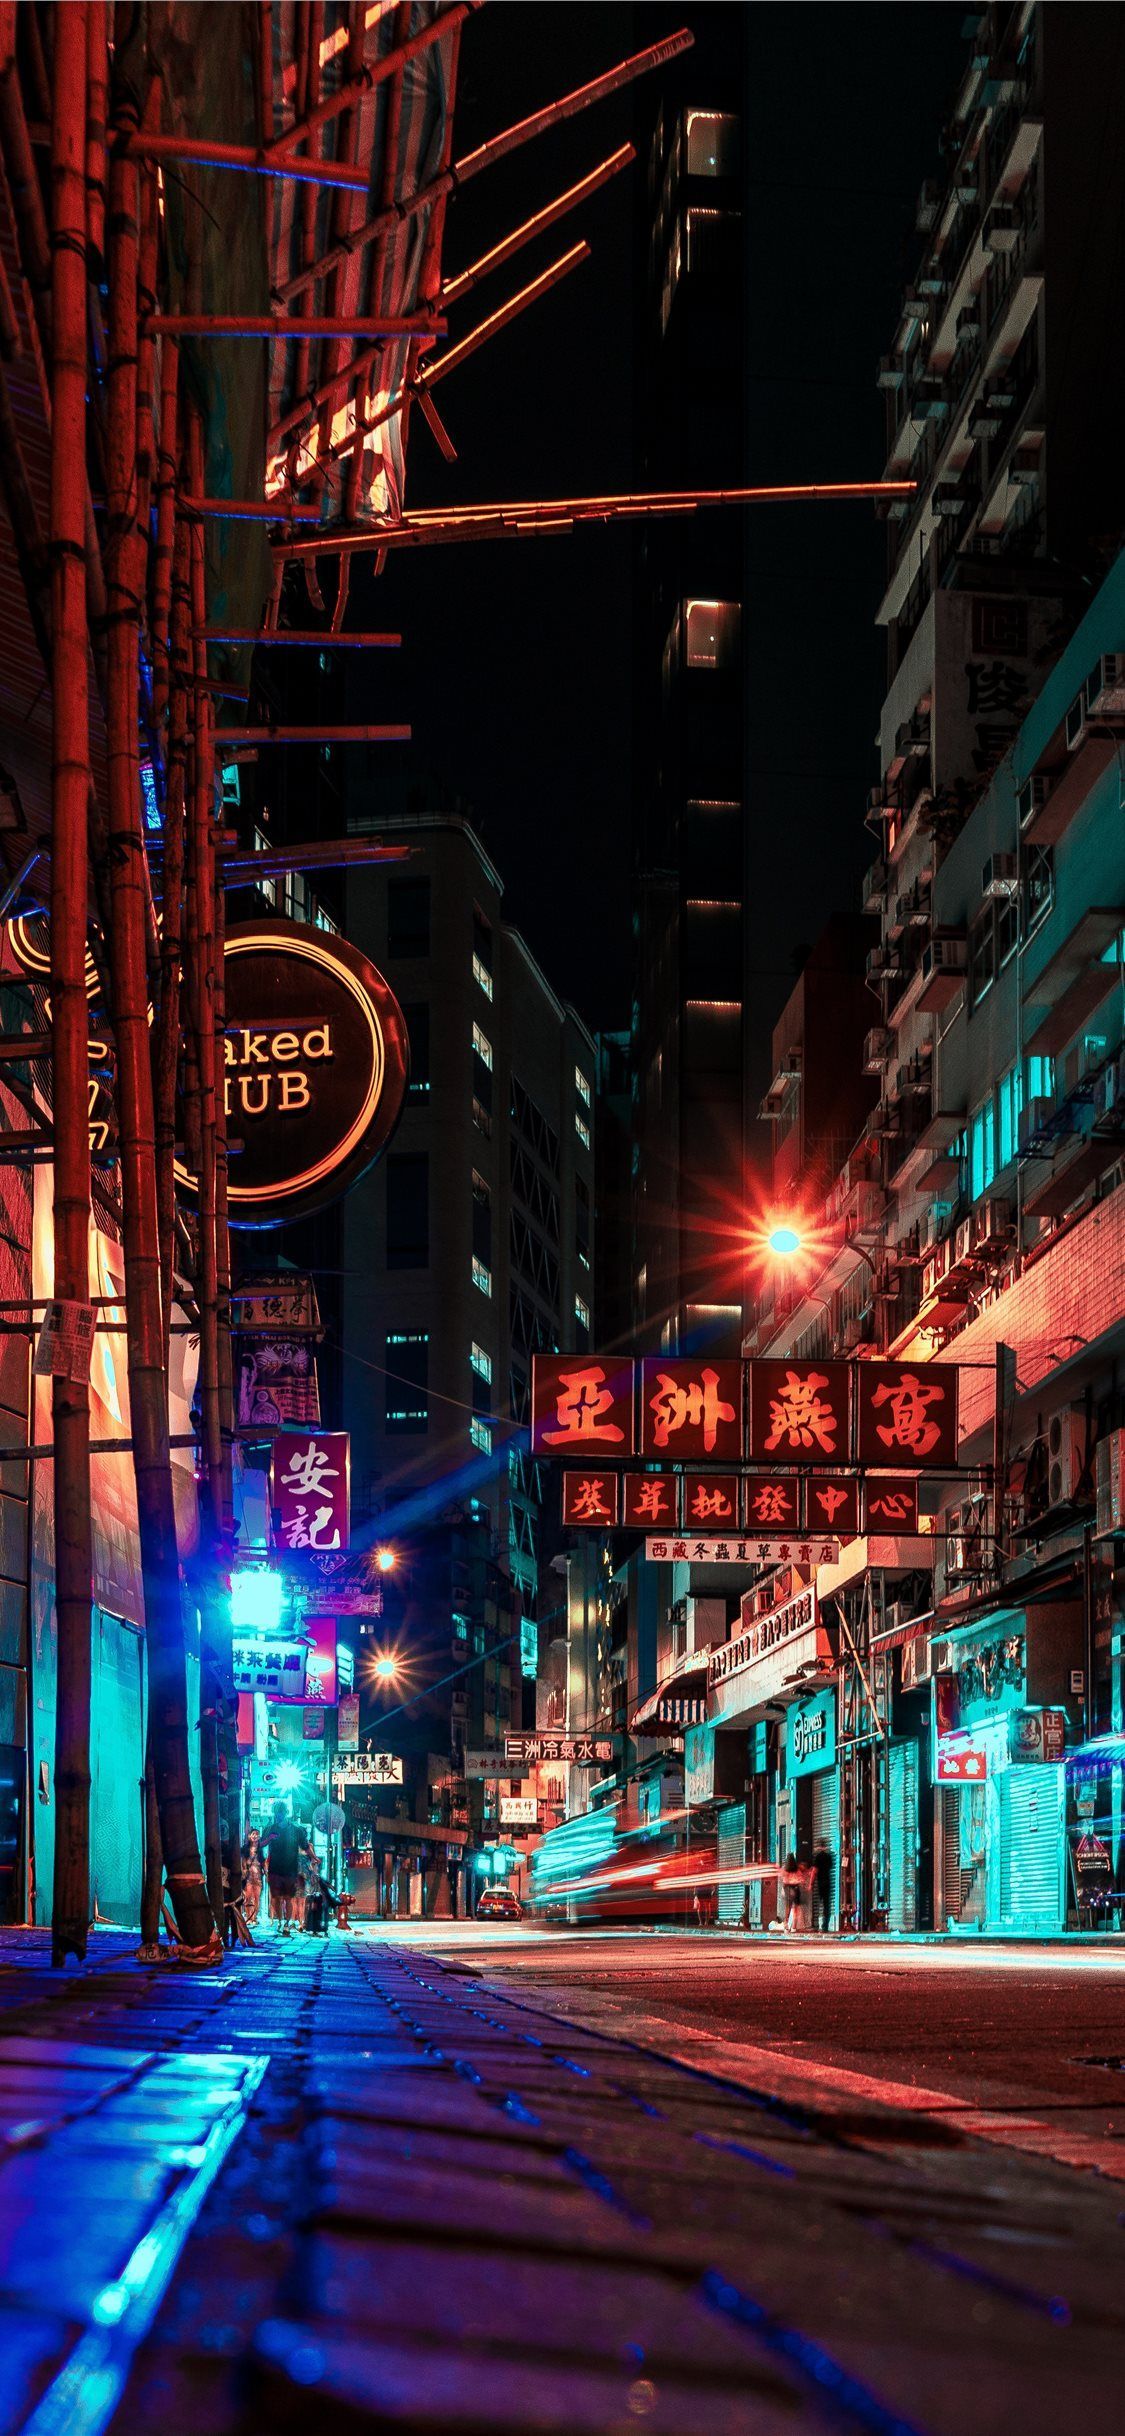 Hong Kong. Fotografia notte, Sfondi vintage, Fotografia urbana